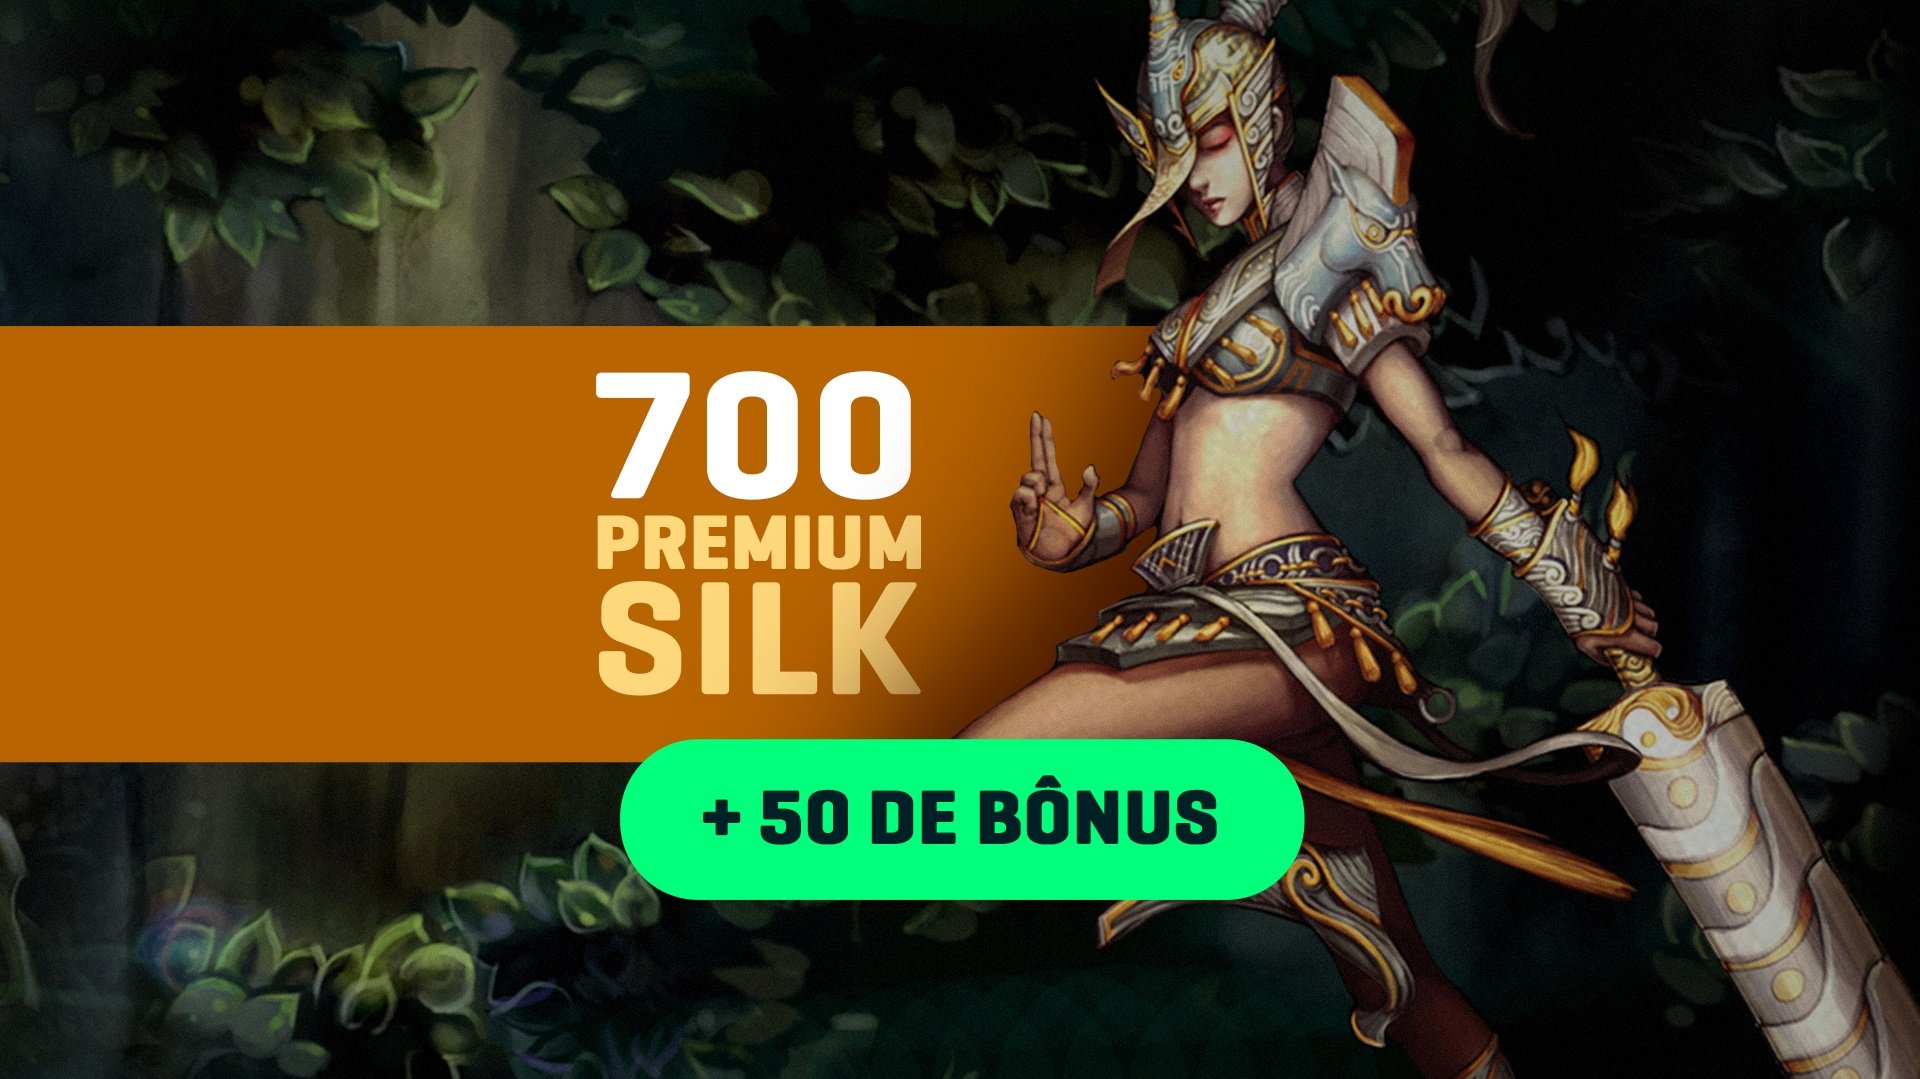 Silkroad – Pacote de 700 PREMIUM SILK + Bônus de 50 PREMIUM SILK cover